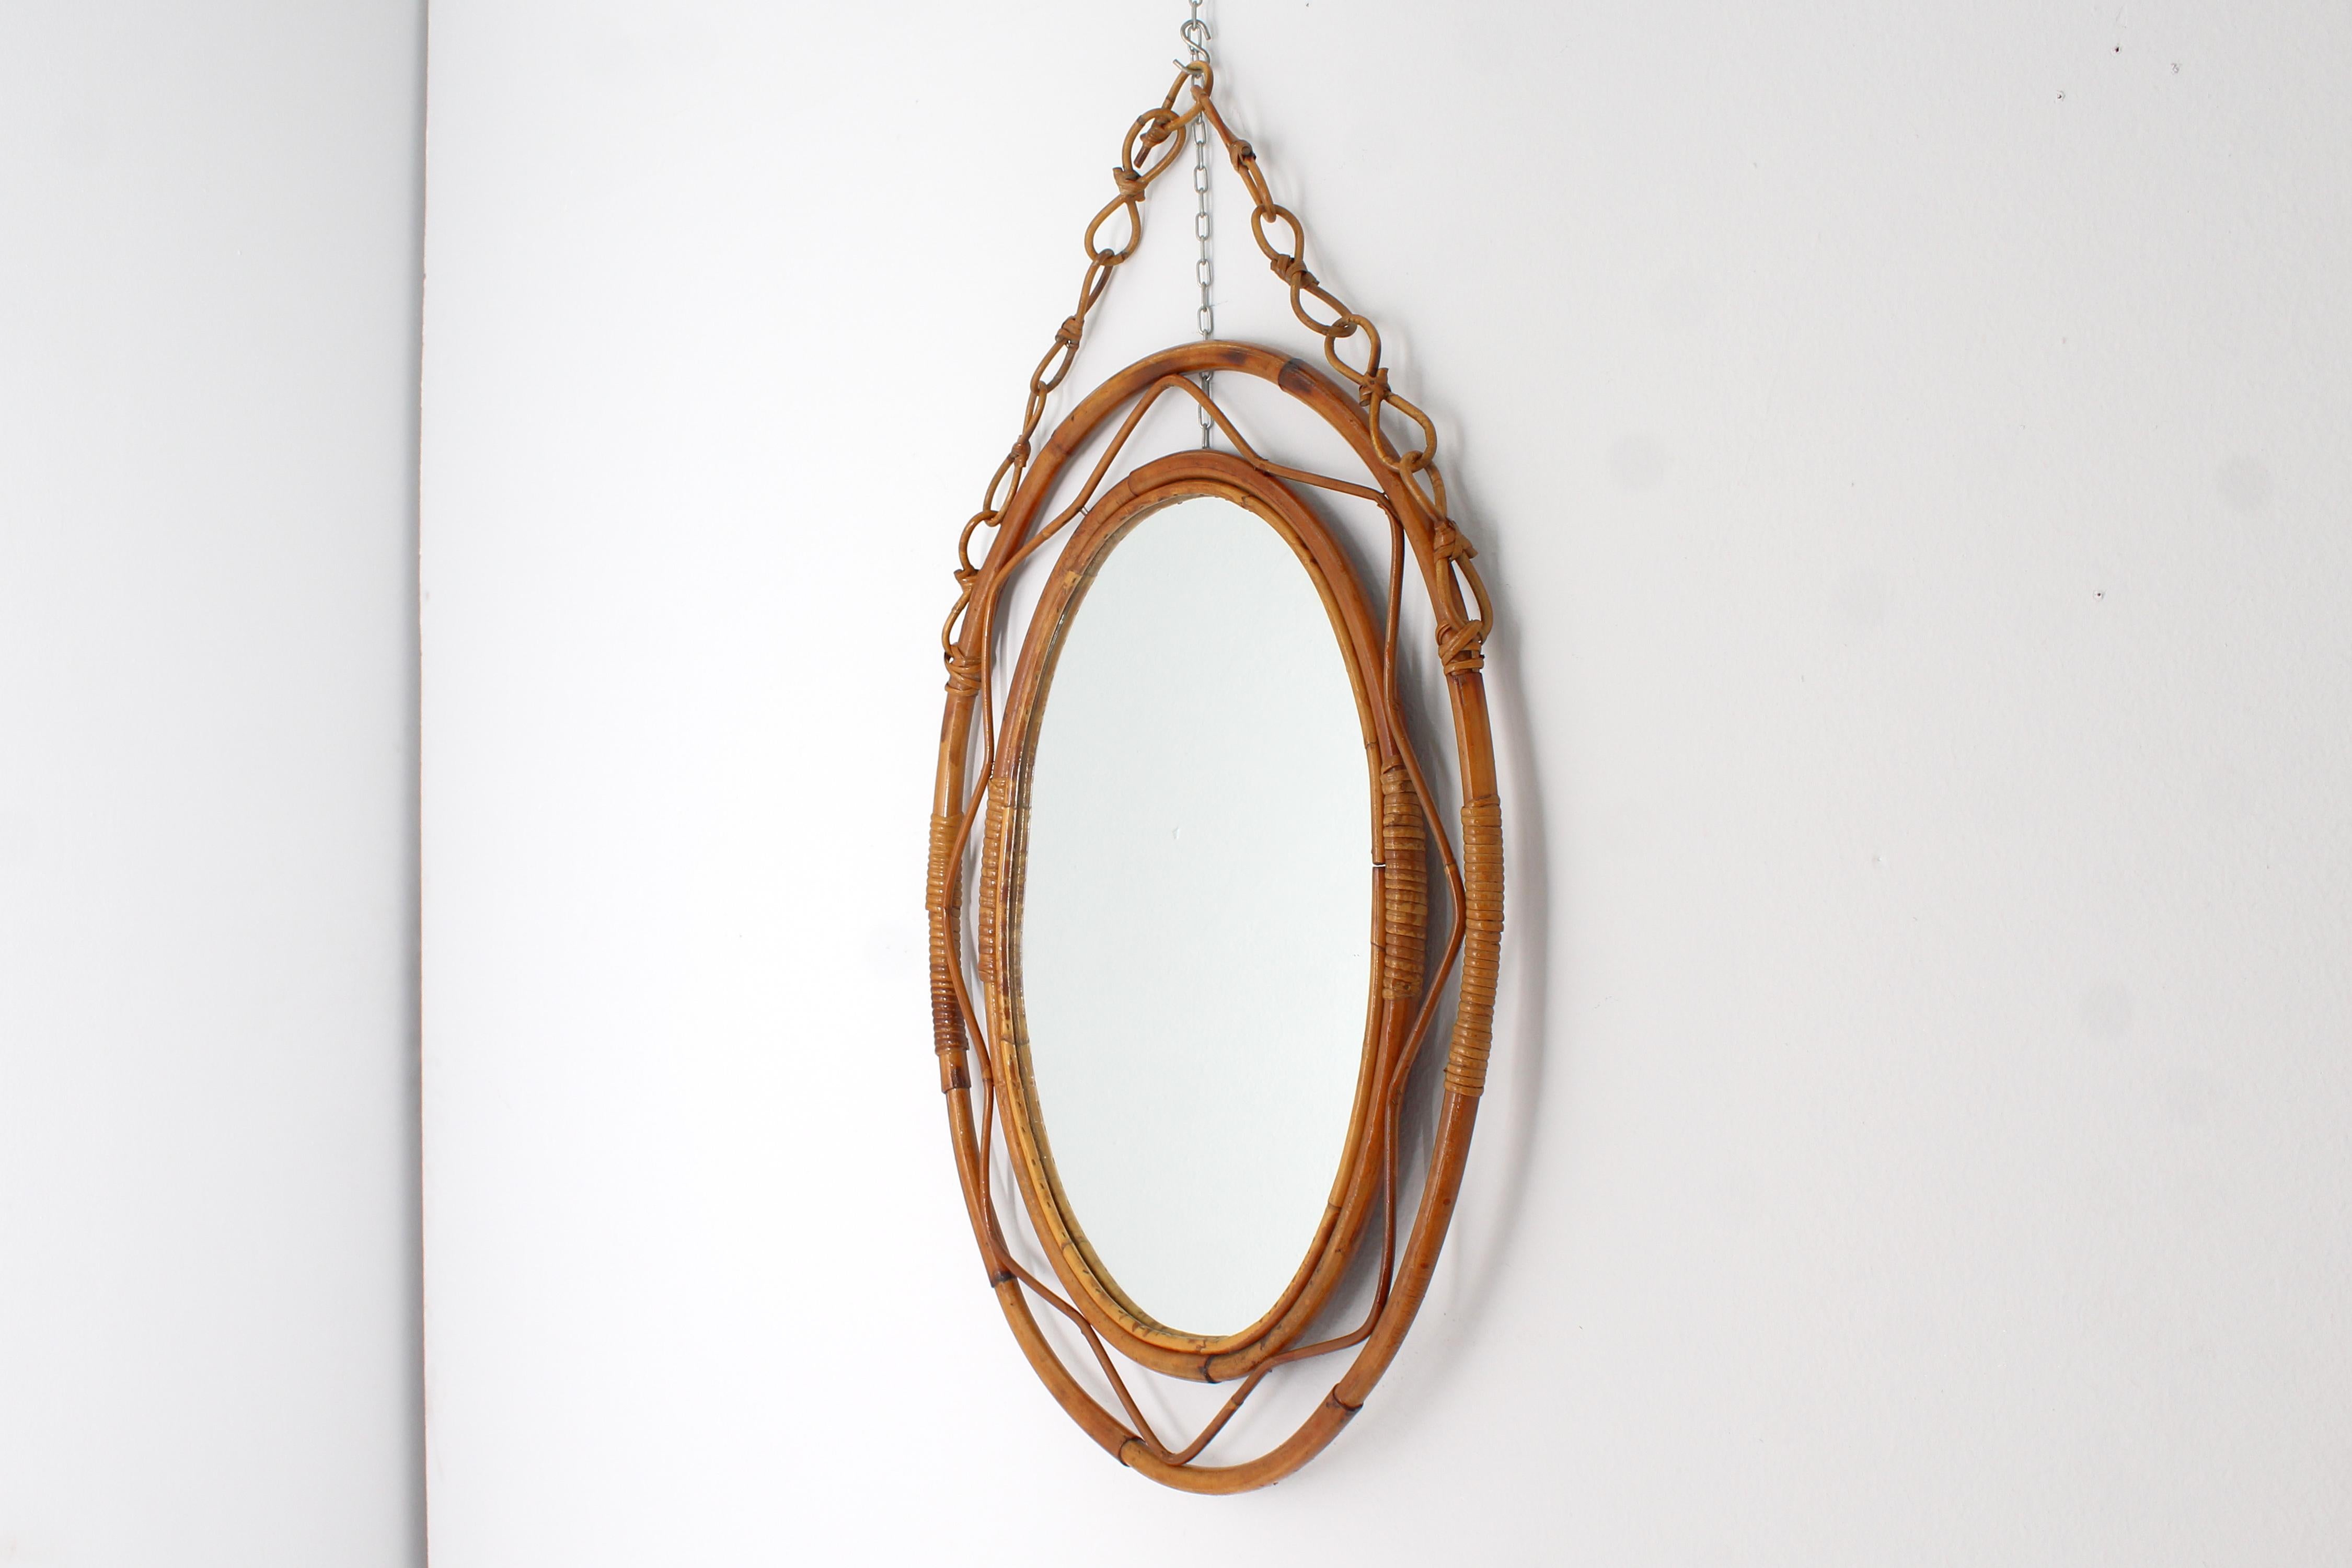 Midcentury Bonacina Oval Bamboo and Wicker Mirror, Italy, 1960s For Sale 2